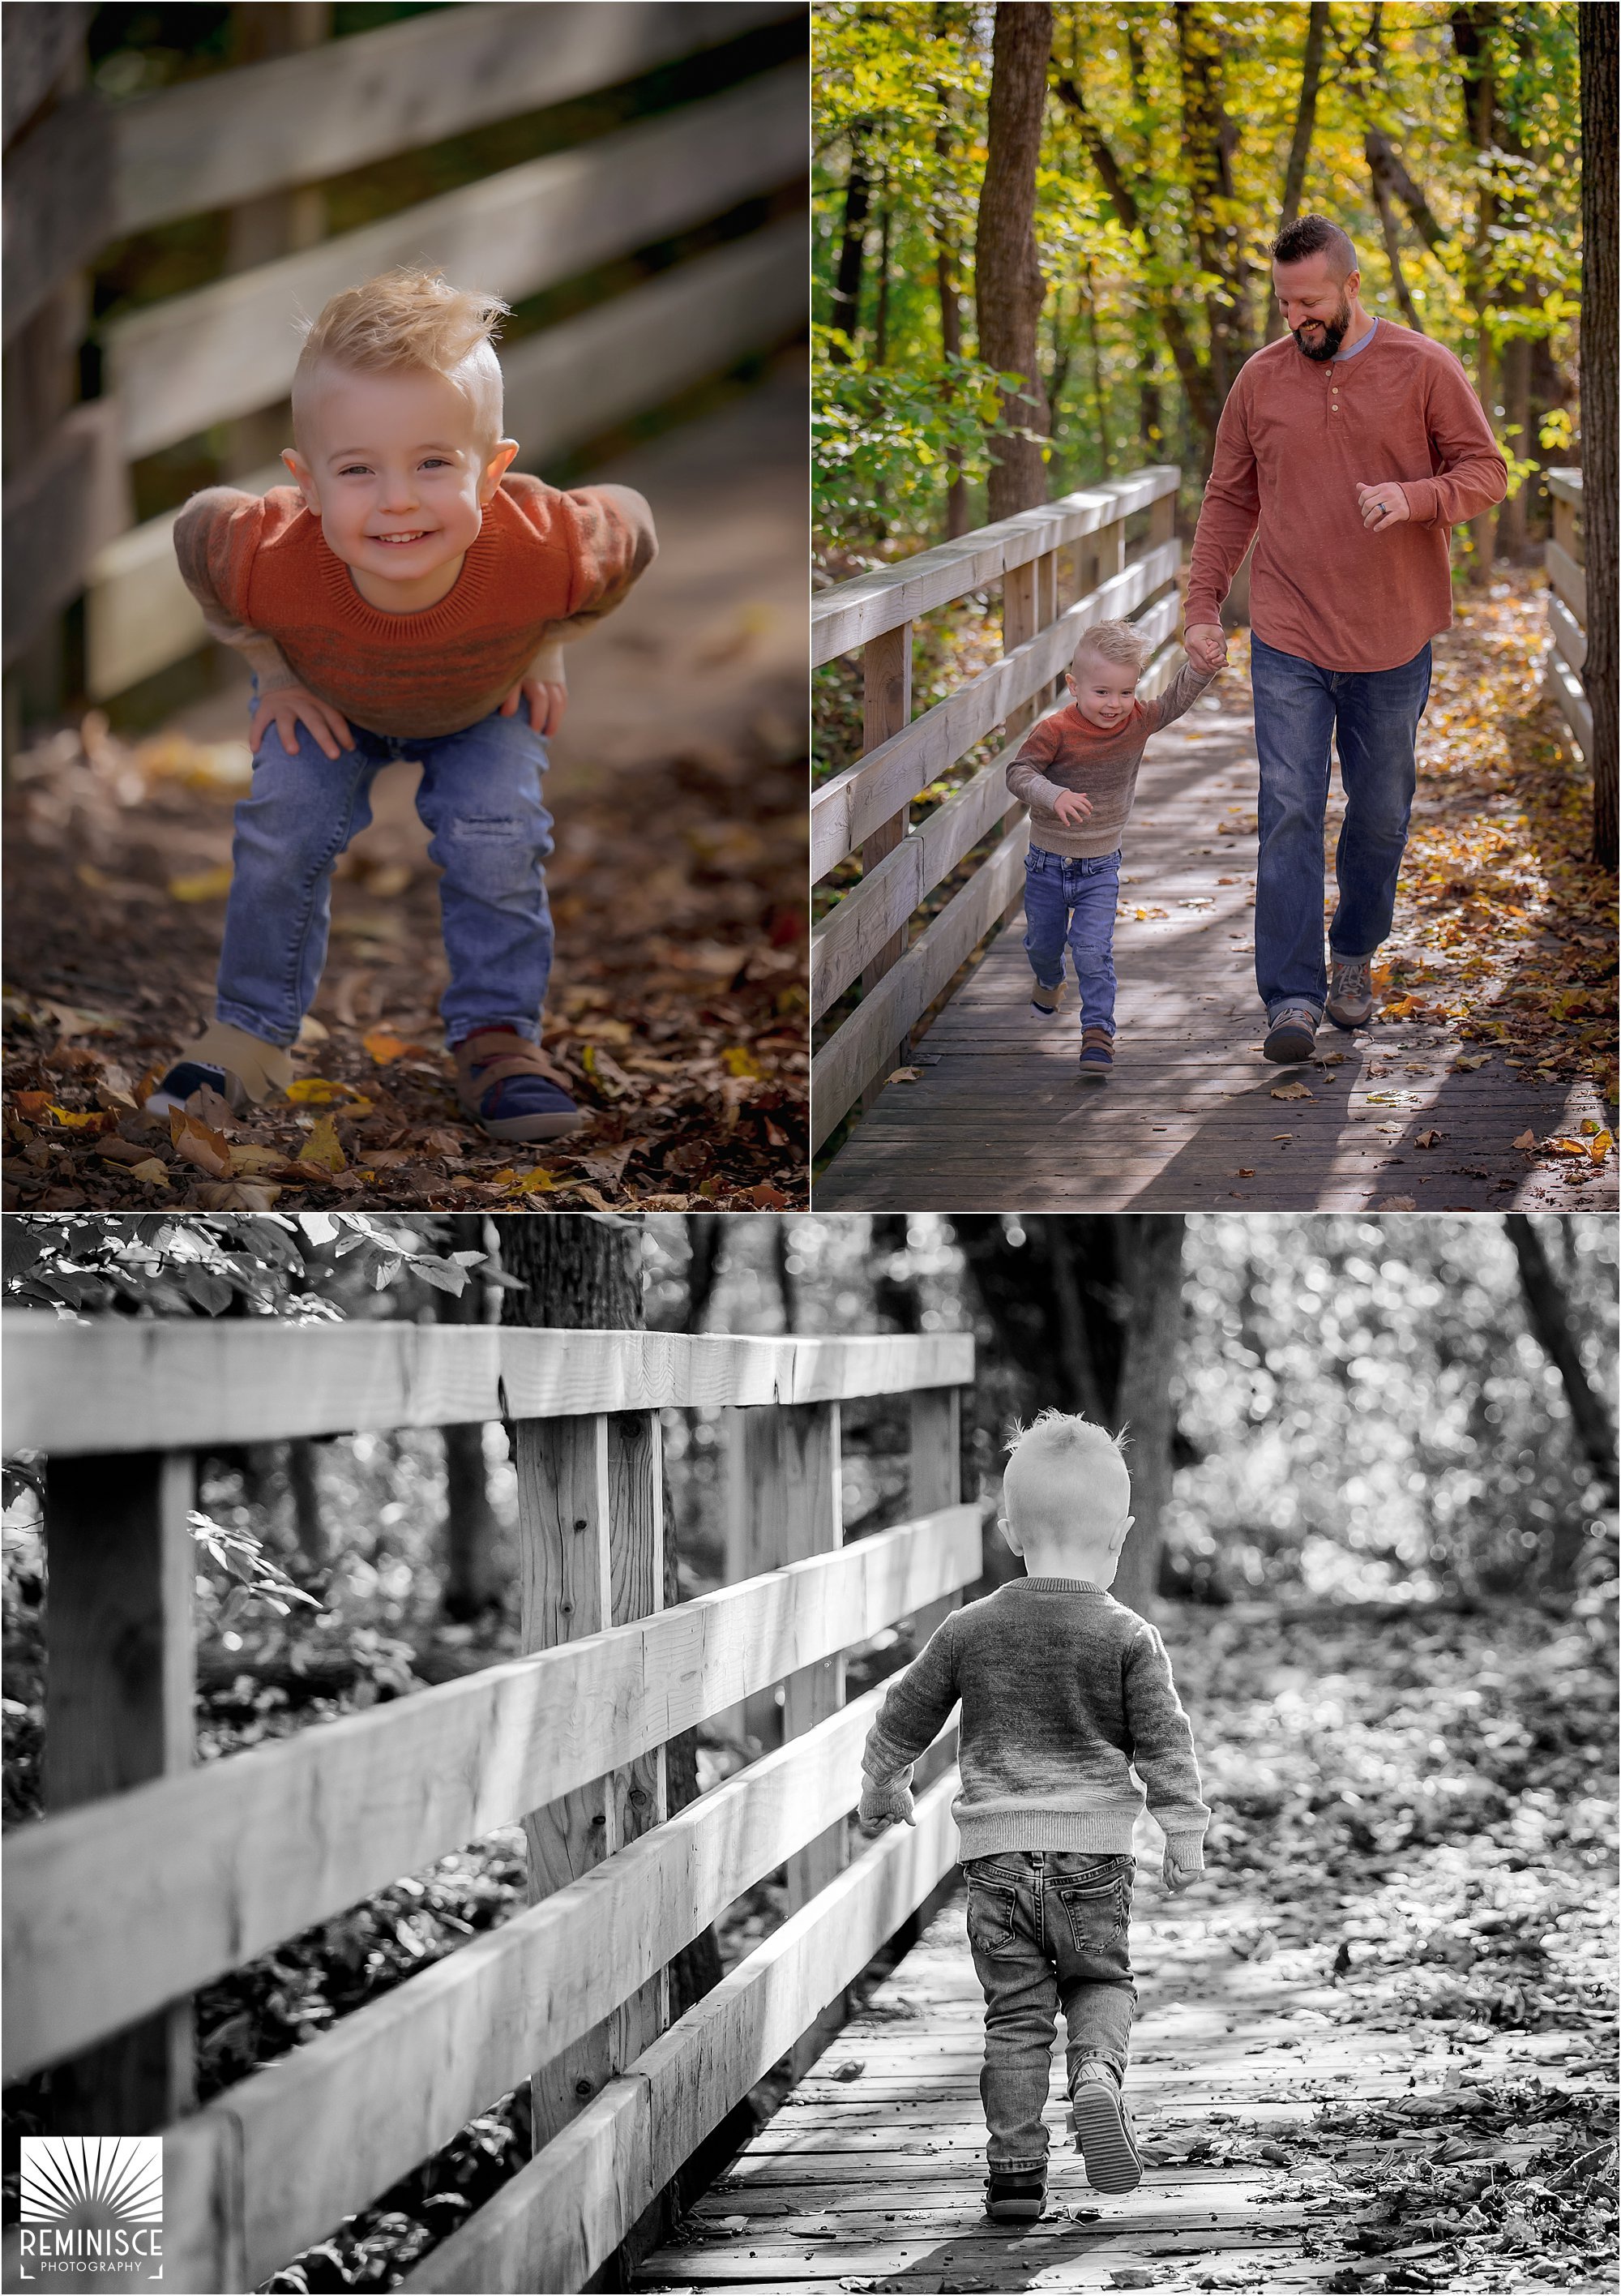 04-third-birthday-portraits-fall-photos-schlitz-audubon-nature-center-running-across-bridge.jpg